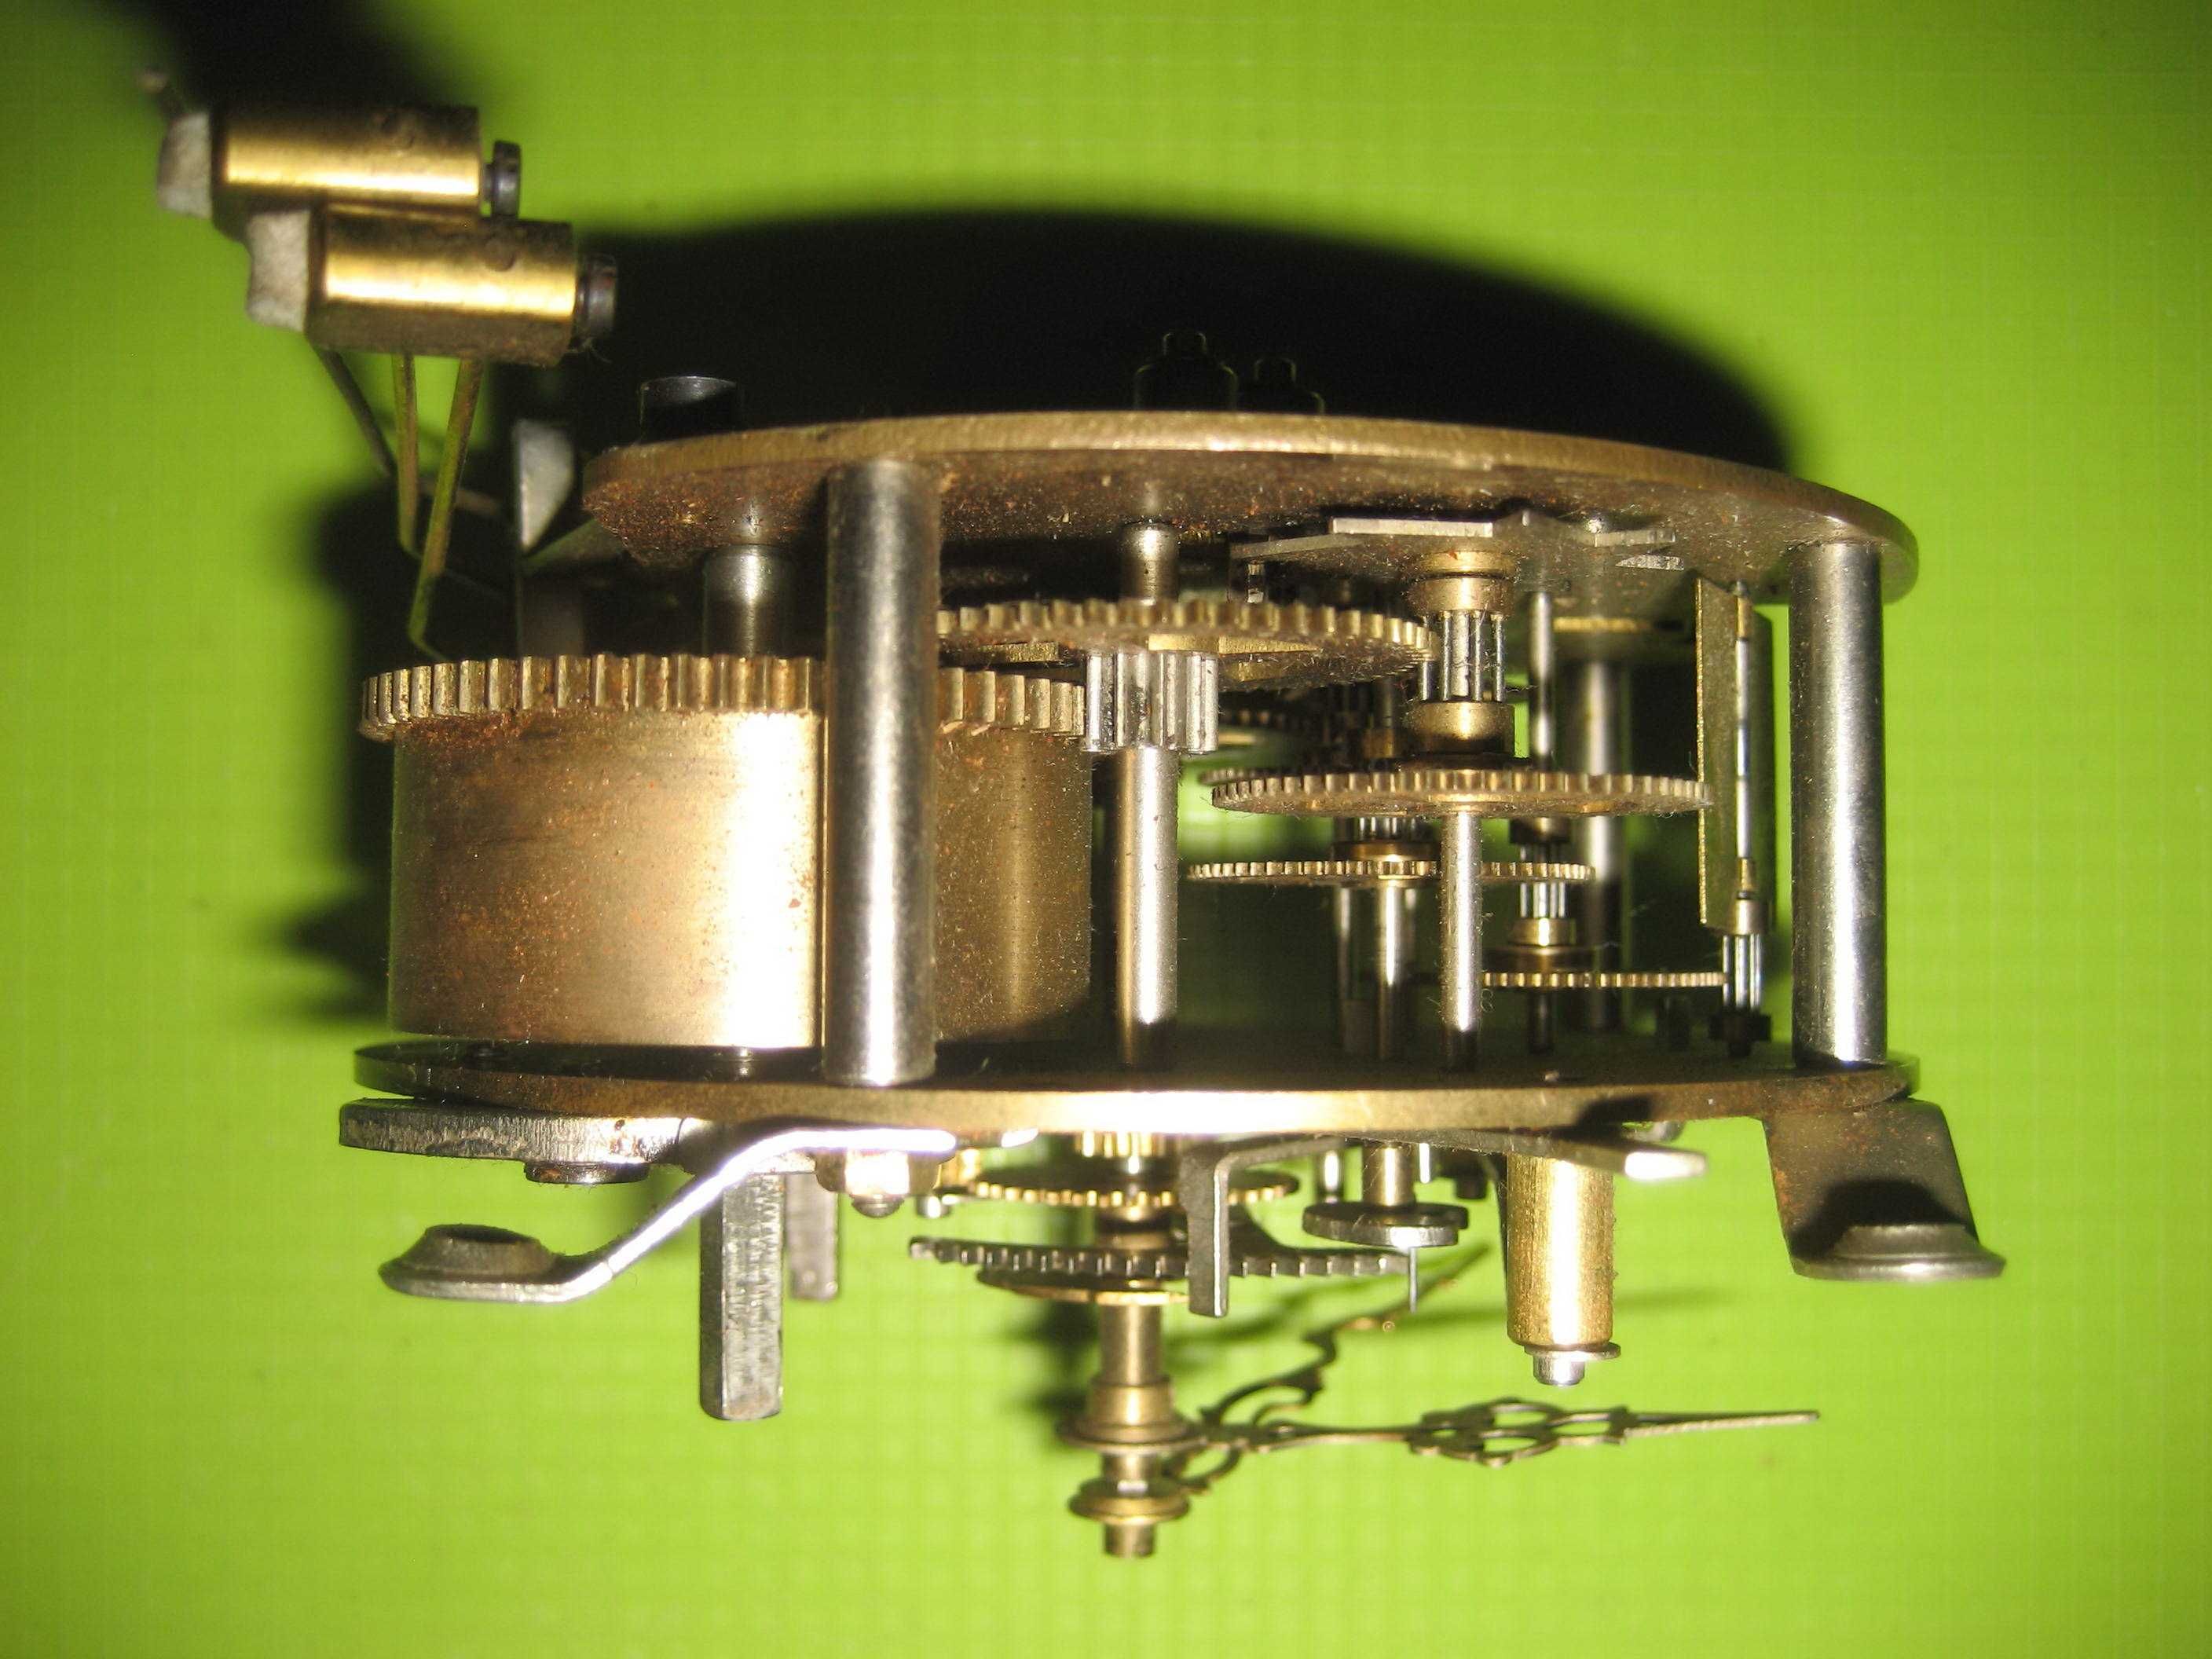 A09-Mecanism rotund pendul vechi Groblinger anii cca 1900.